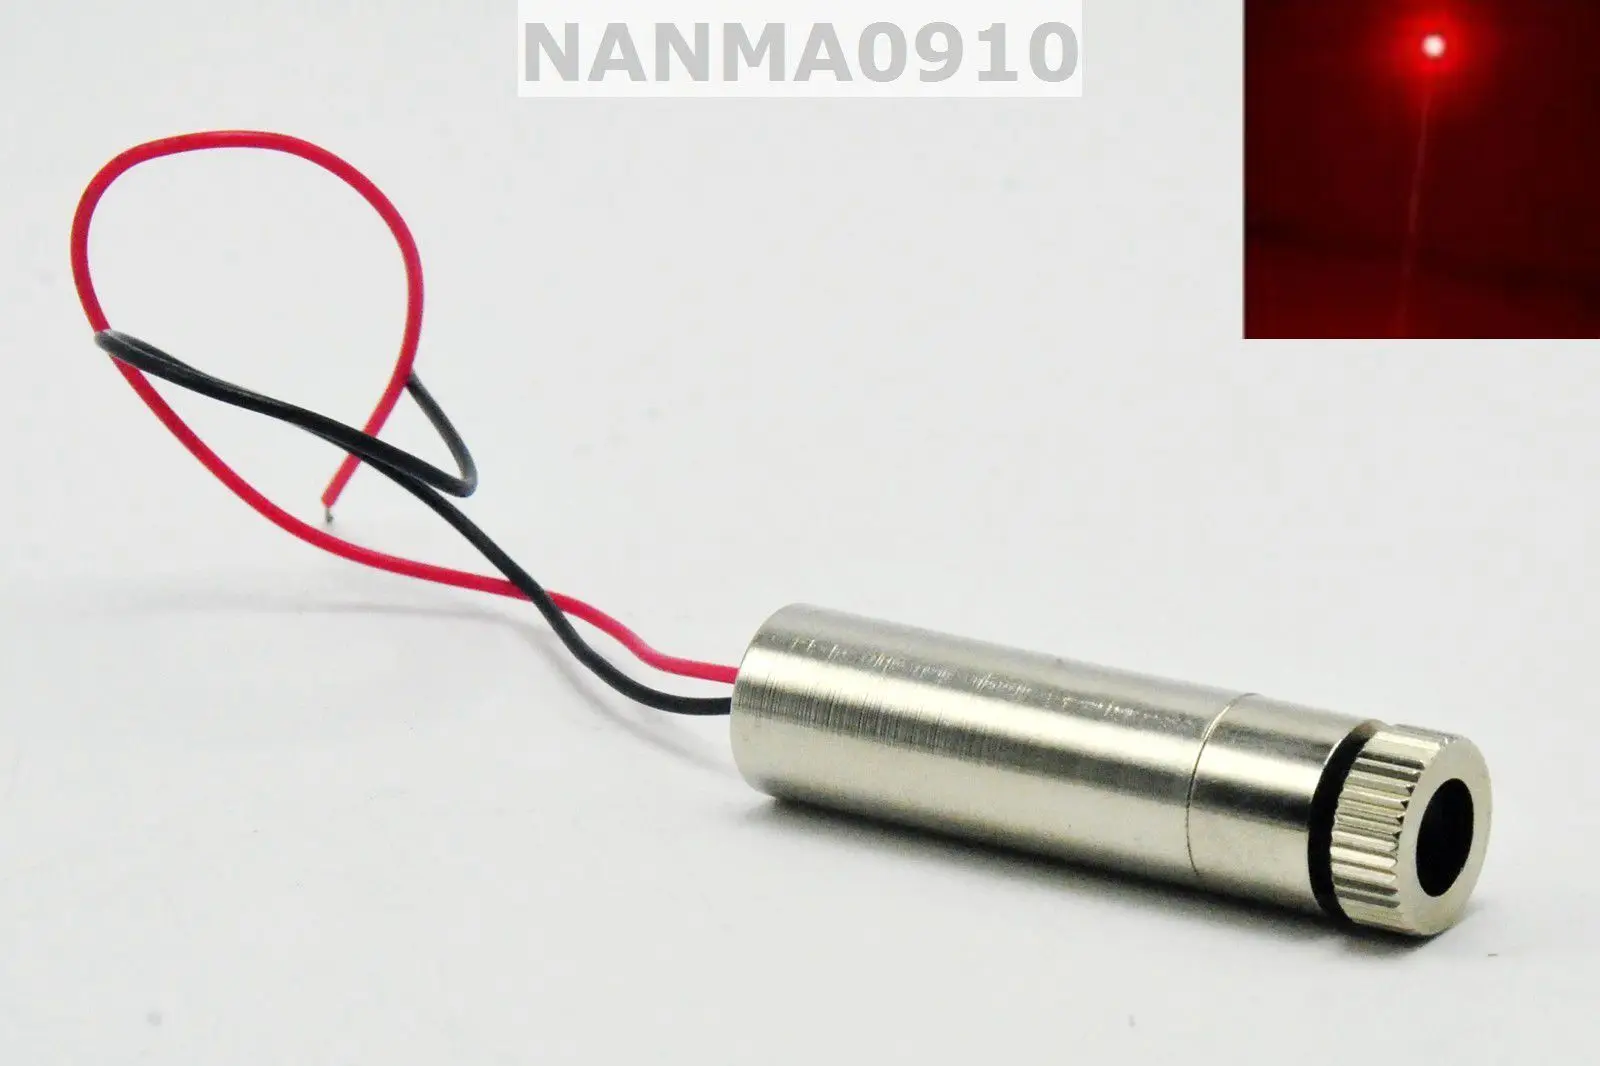 Diode laser rouge réglable focalisable, technologie DOT, lumière LED, 5V, 100mW, 650nm